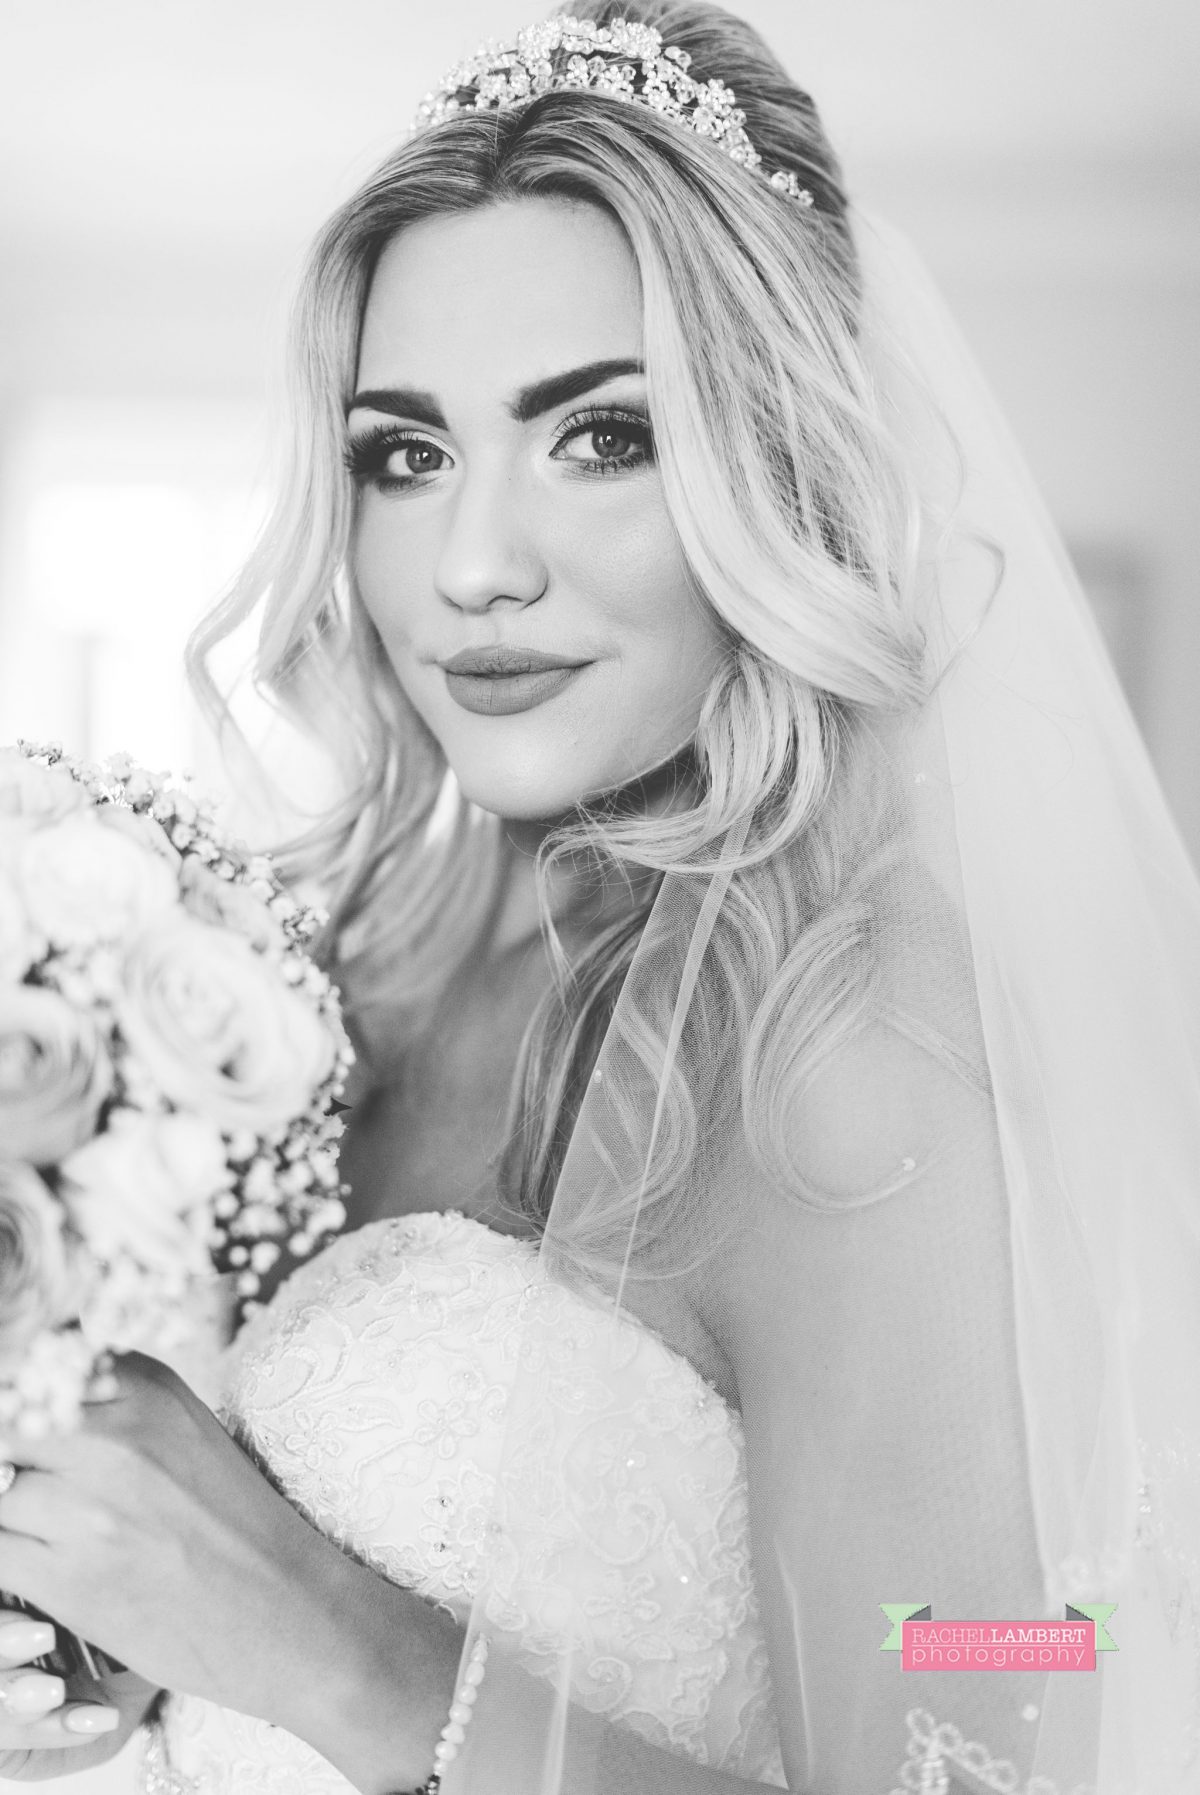 rachel lambert photography stunning bridal prep black and white